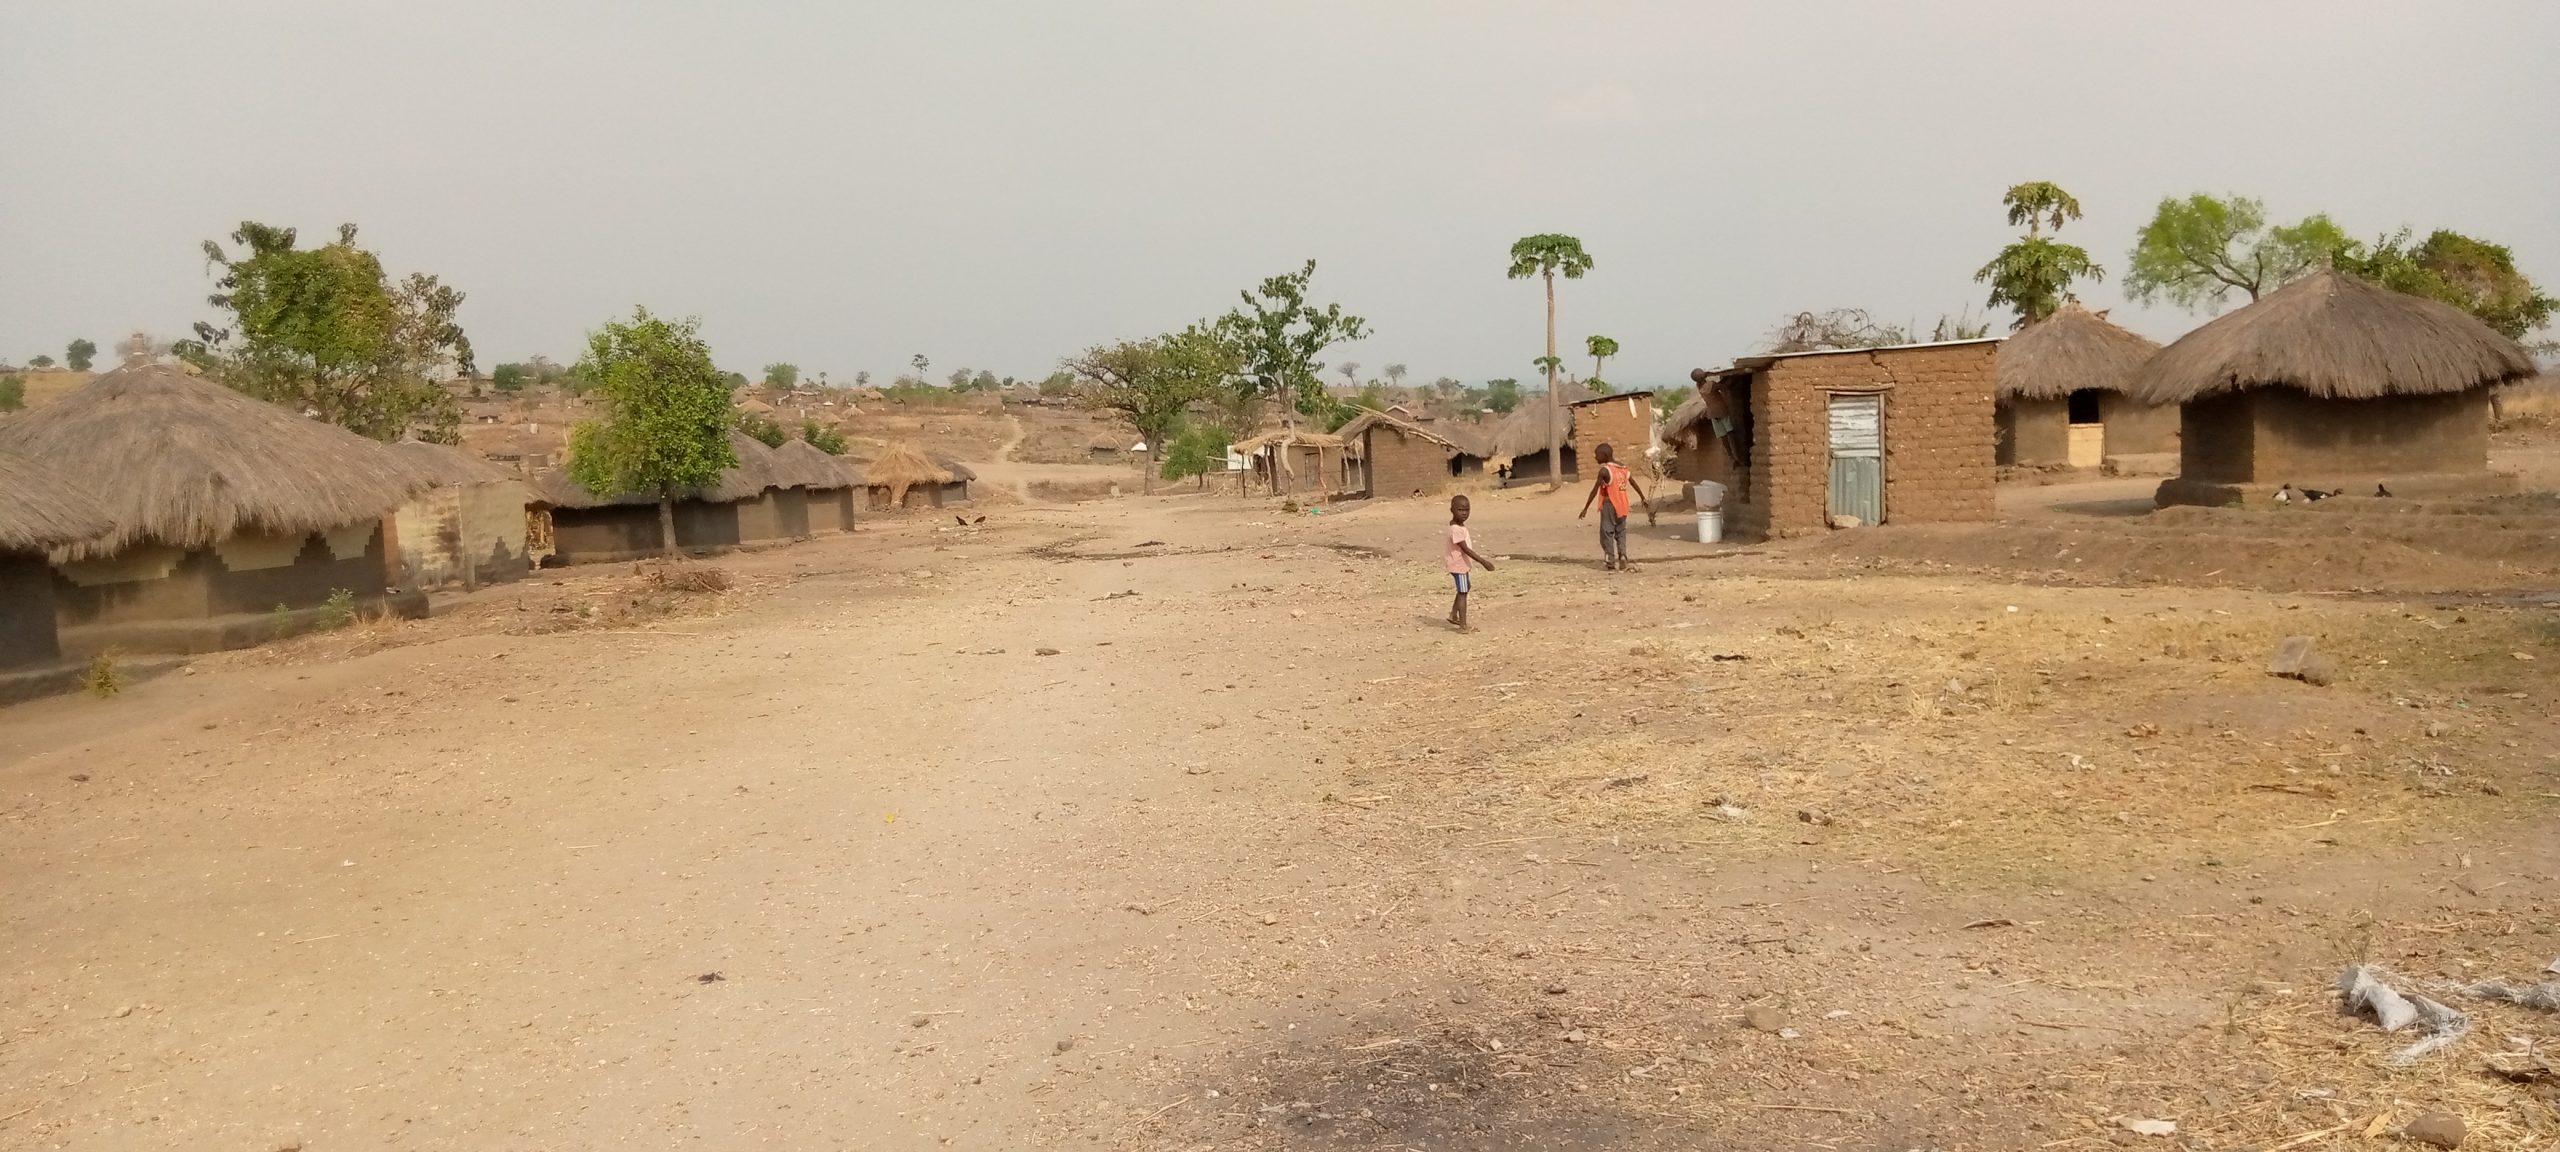 Refugee settlement in Northern Uganda